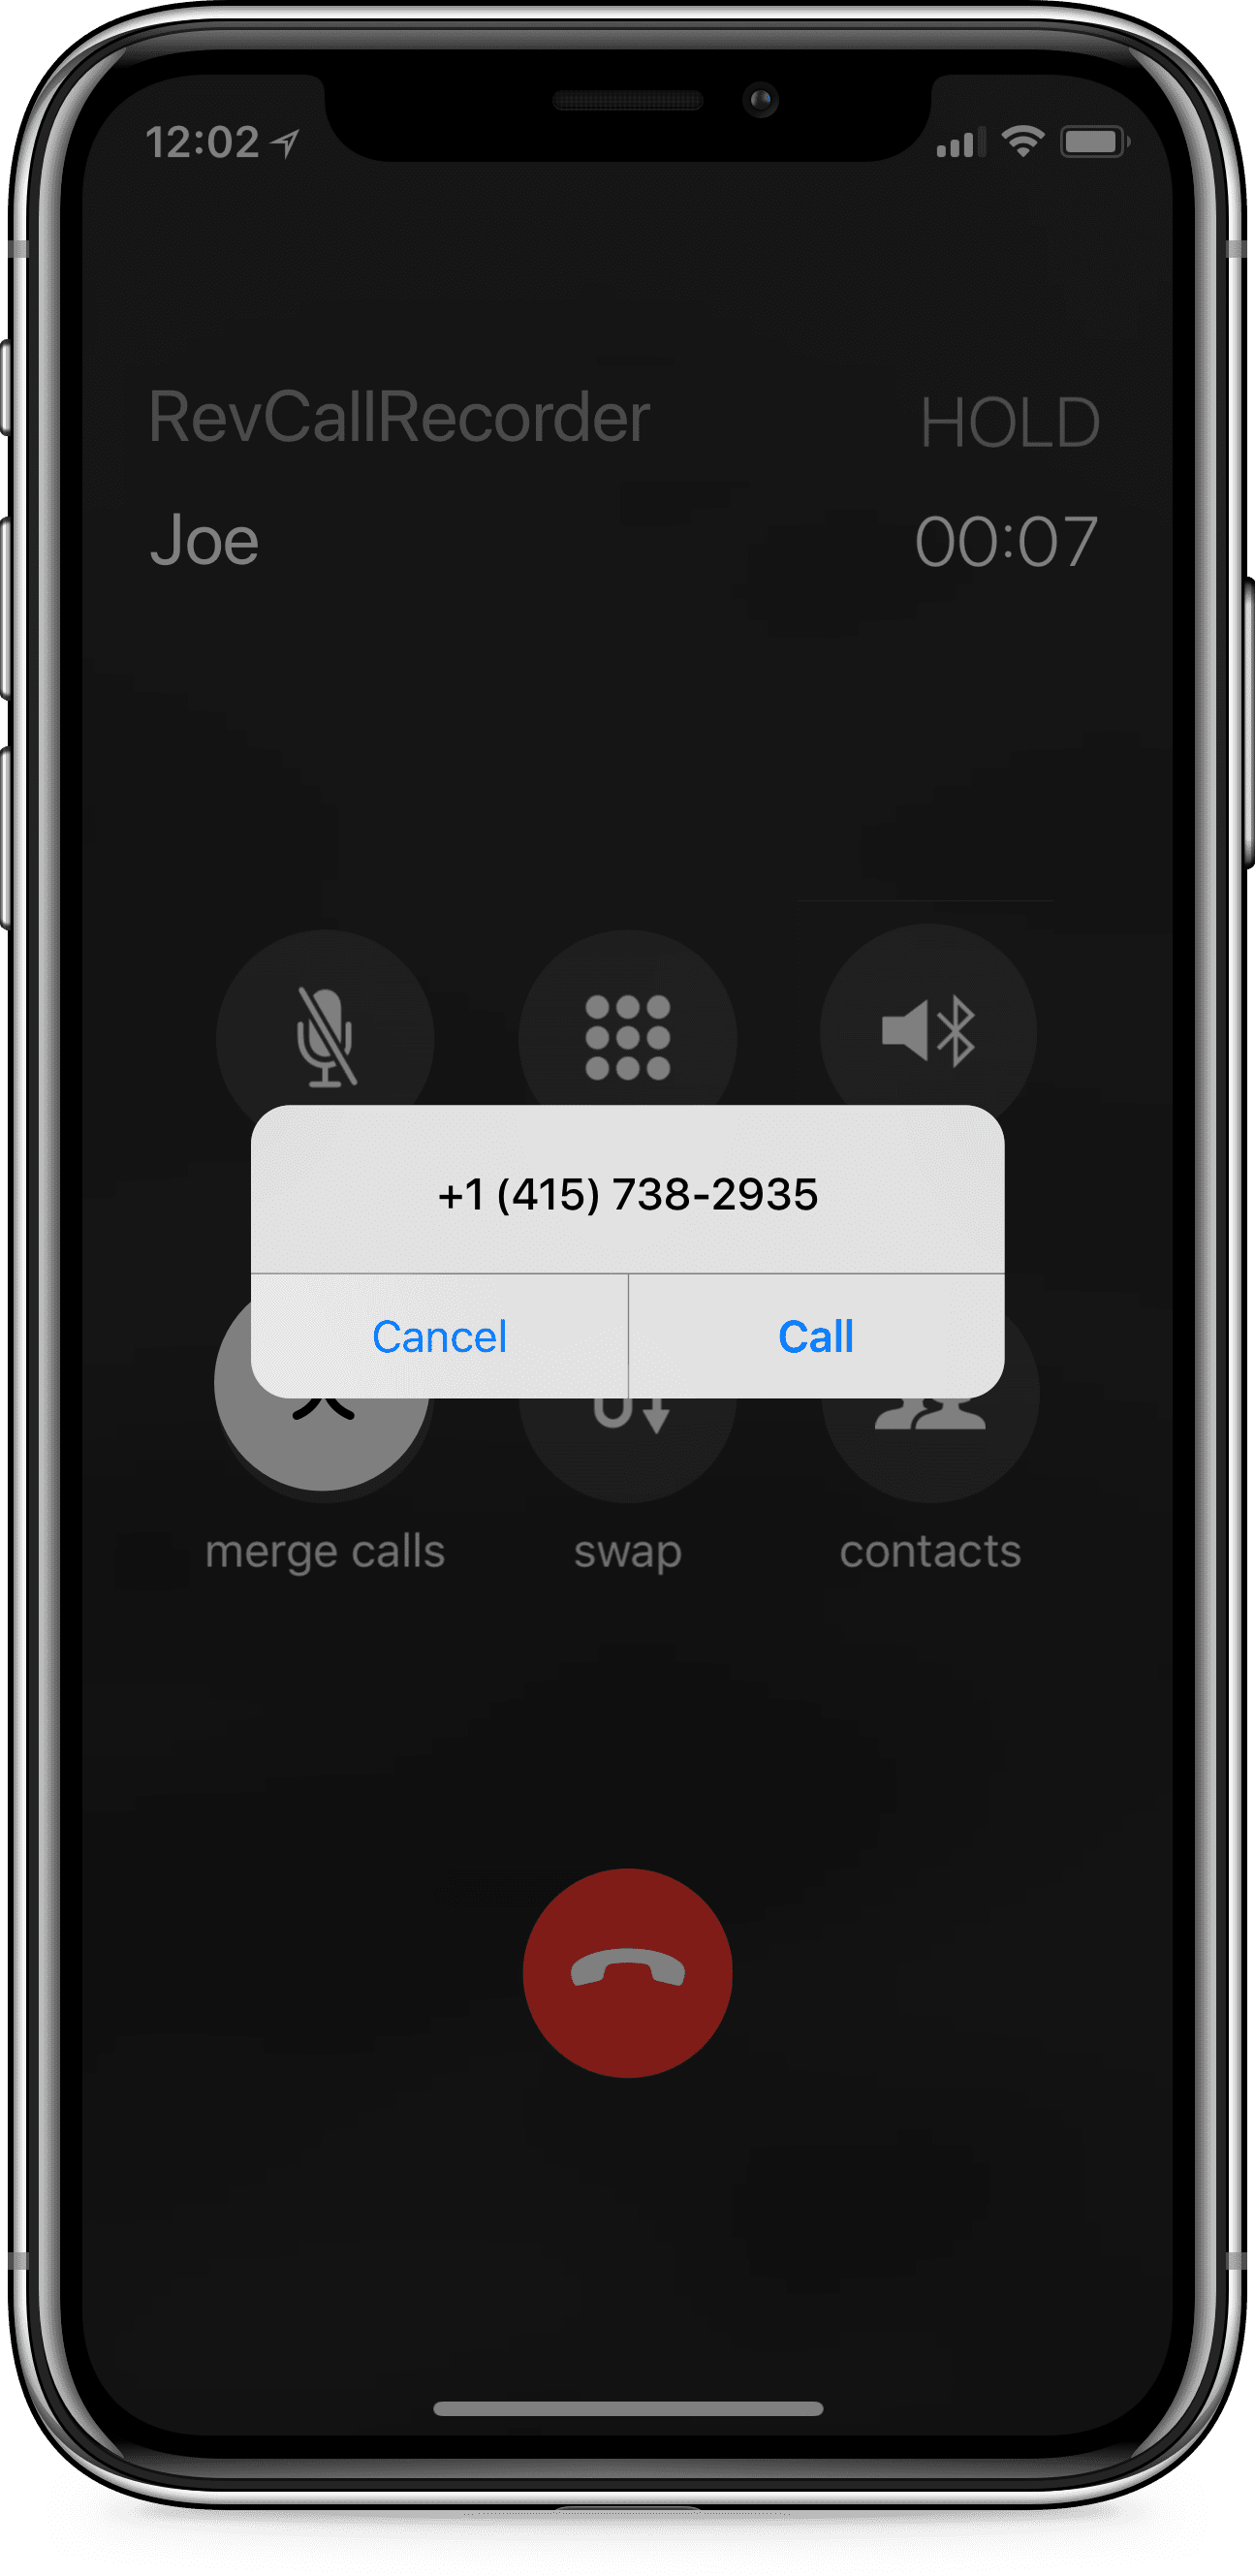 iPhone使用Rev Call Recorder应用程序录制与名叫Joe的人的呼叫